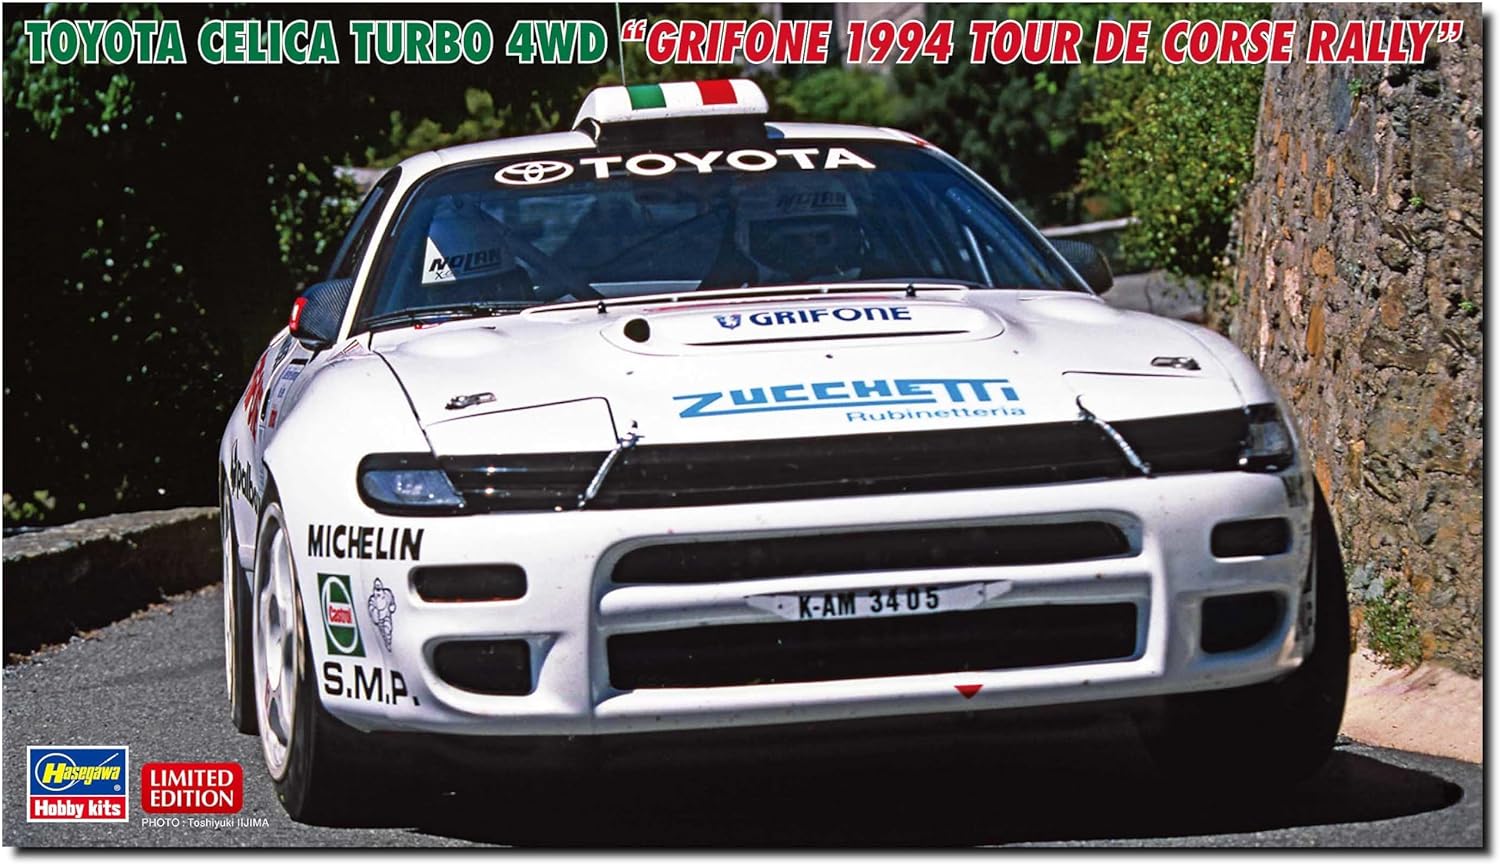 Hasegawa 20673 1/24 Toyota Celica Turbo 4WD Griffine 1994 Tour de Corse Rally - BanzaiHobby